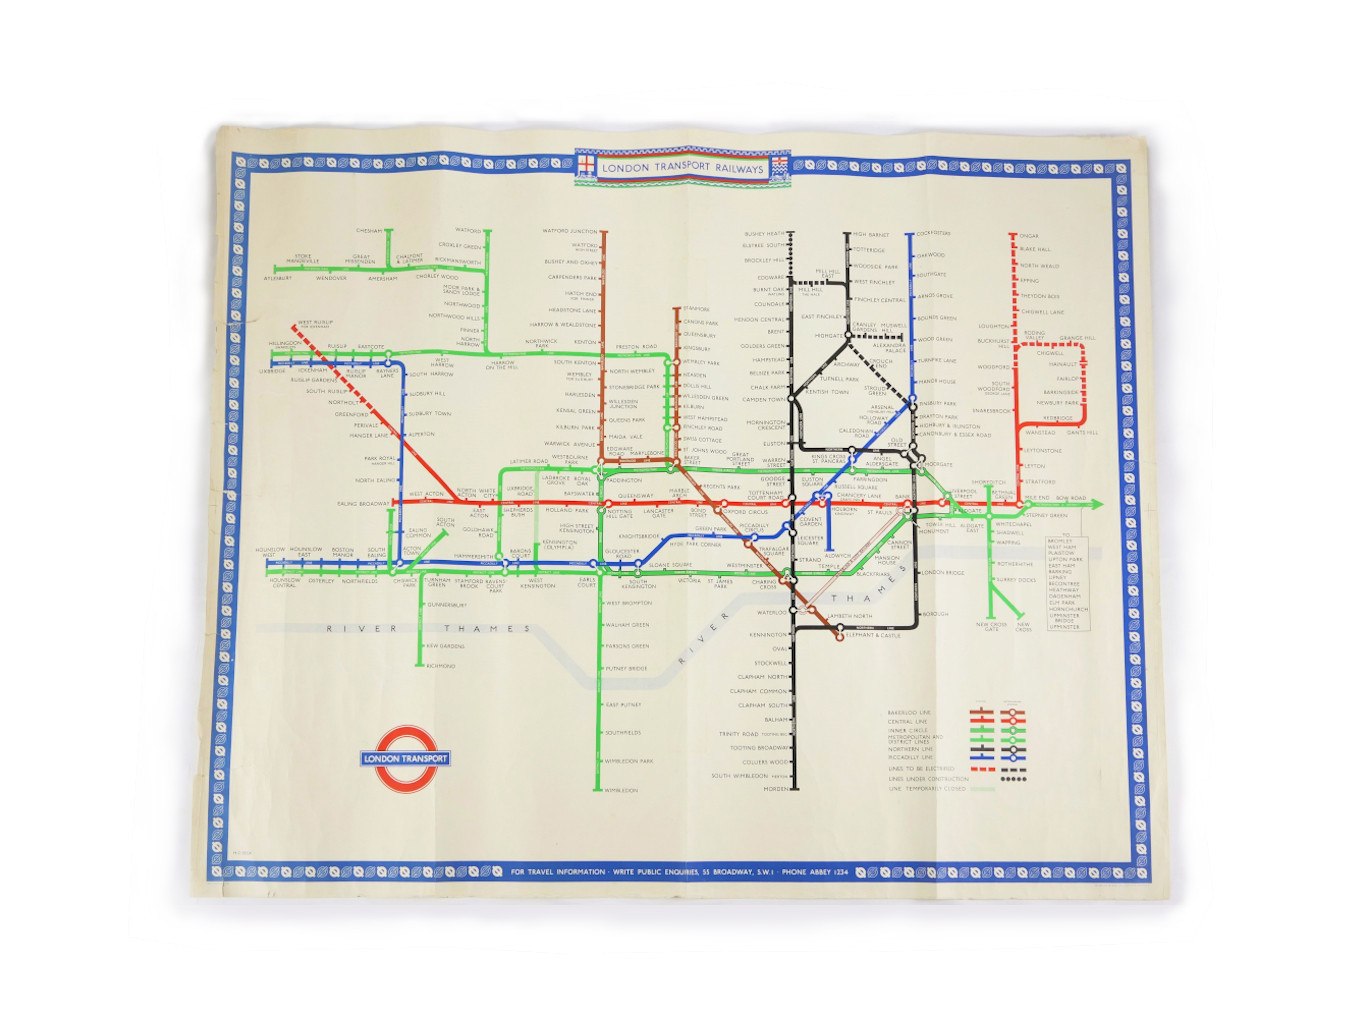 Original Hcbeck London Tube Quad Royal Station Map C1947 Sold